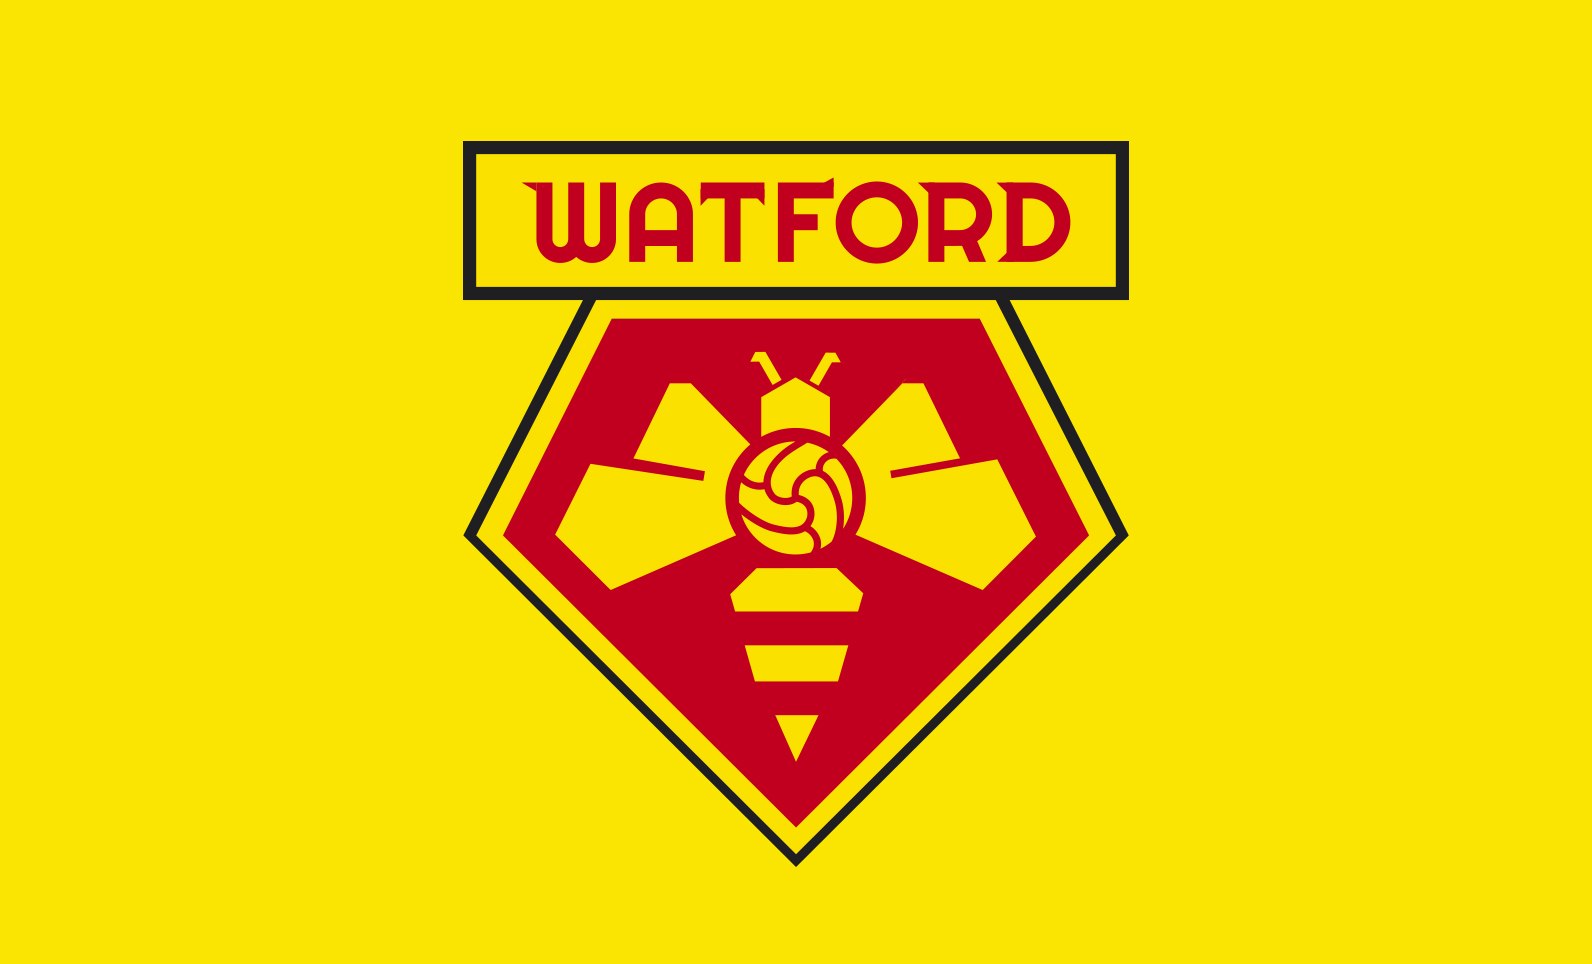 Development about corporate image Watford F.C.